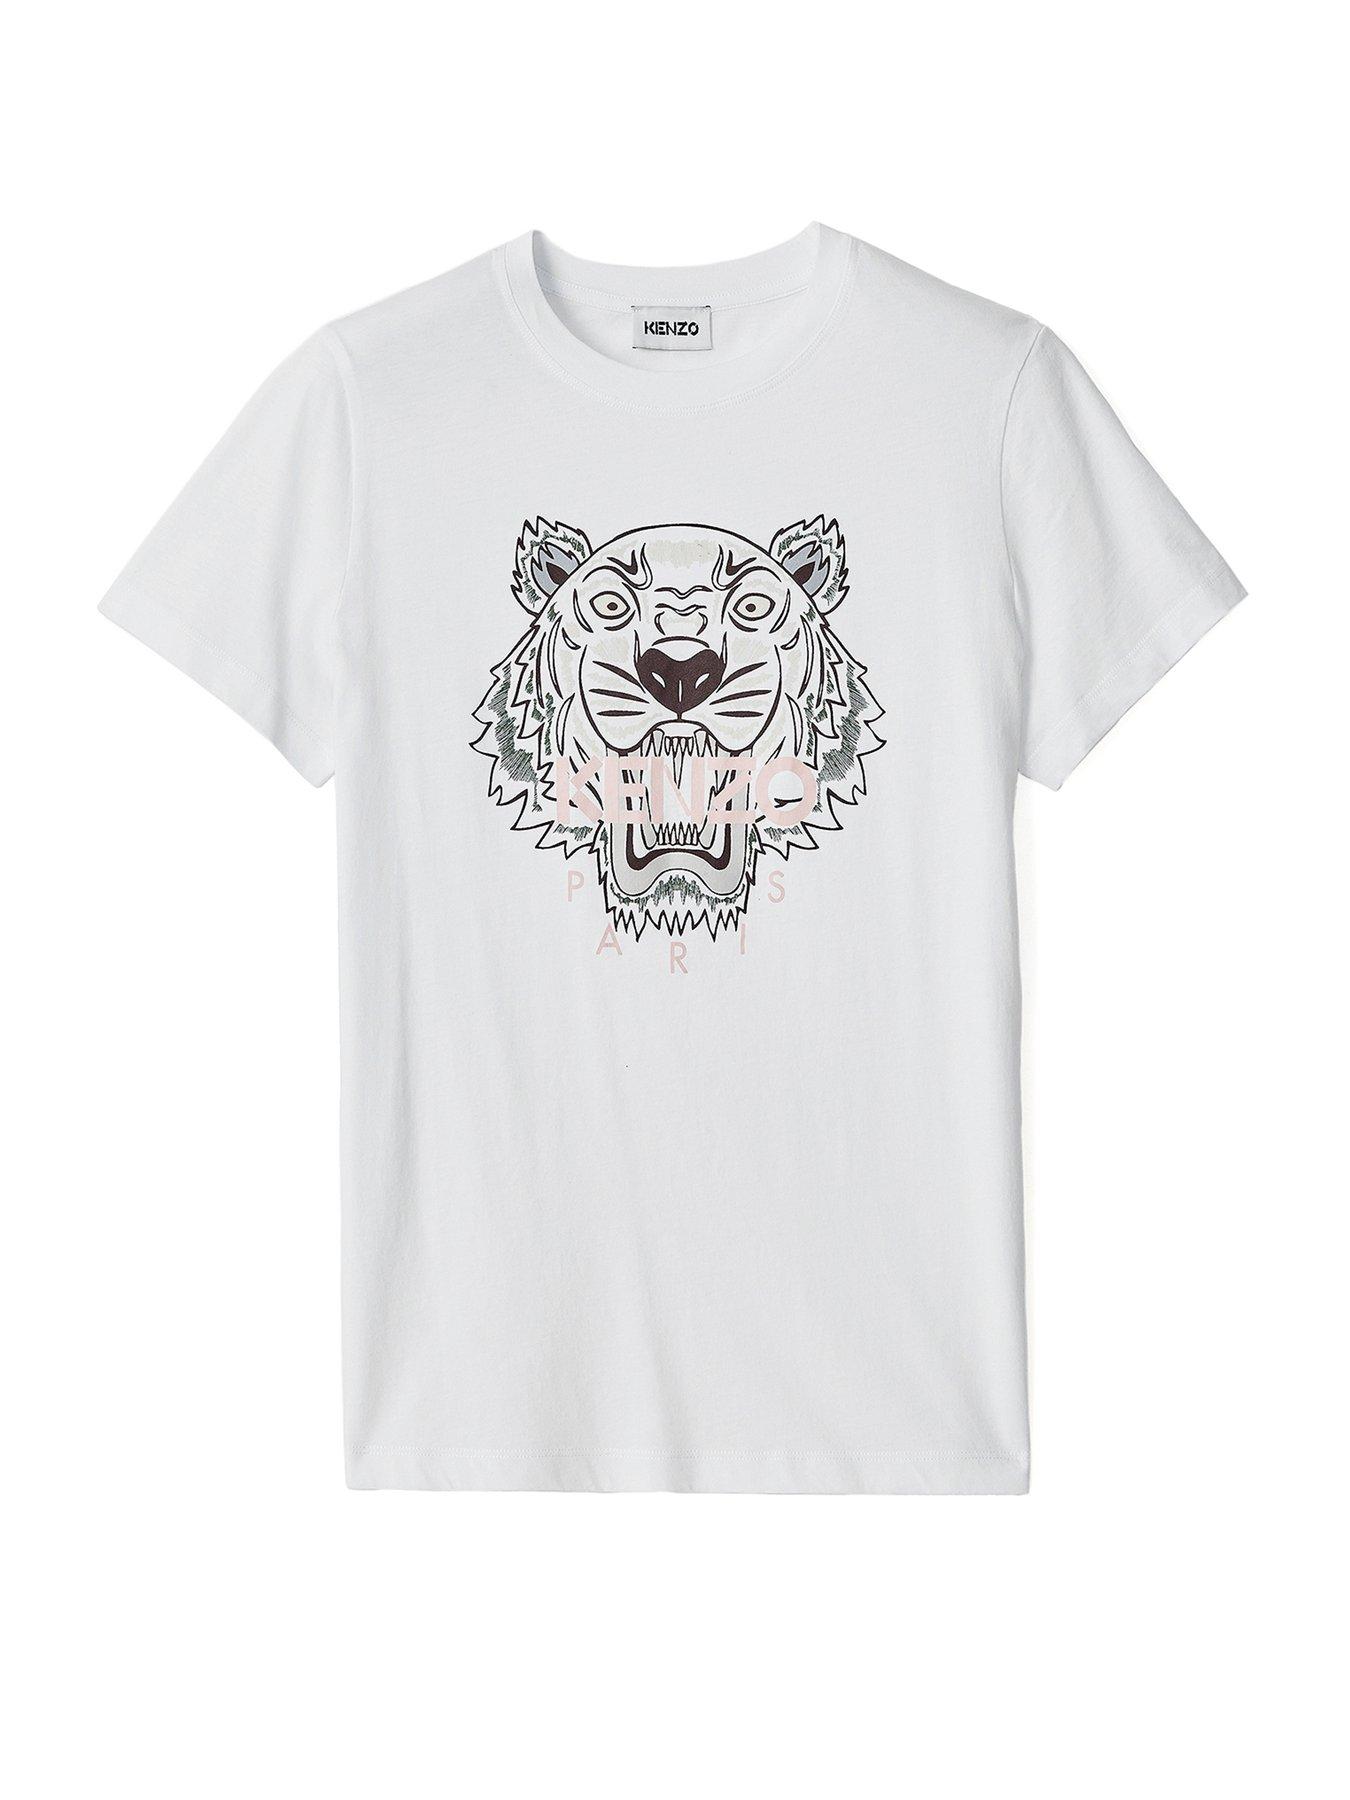 kenzo classic tiger t shirt